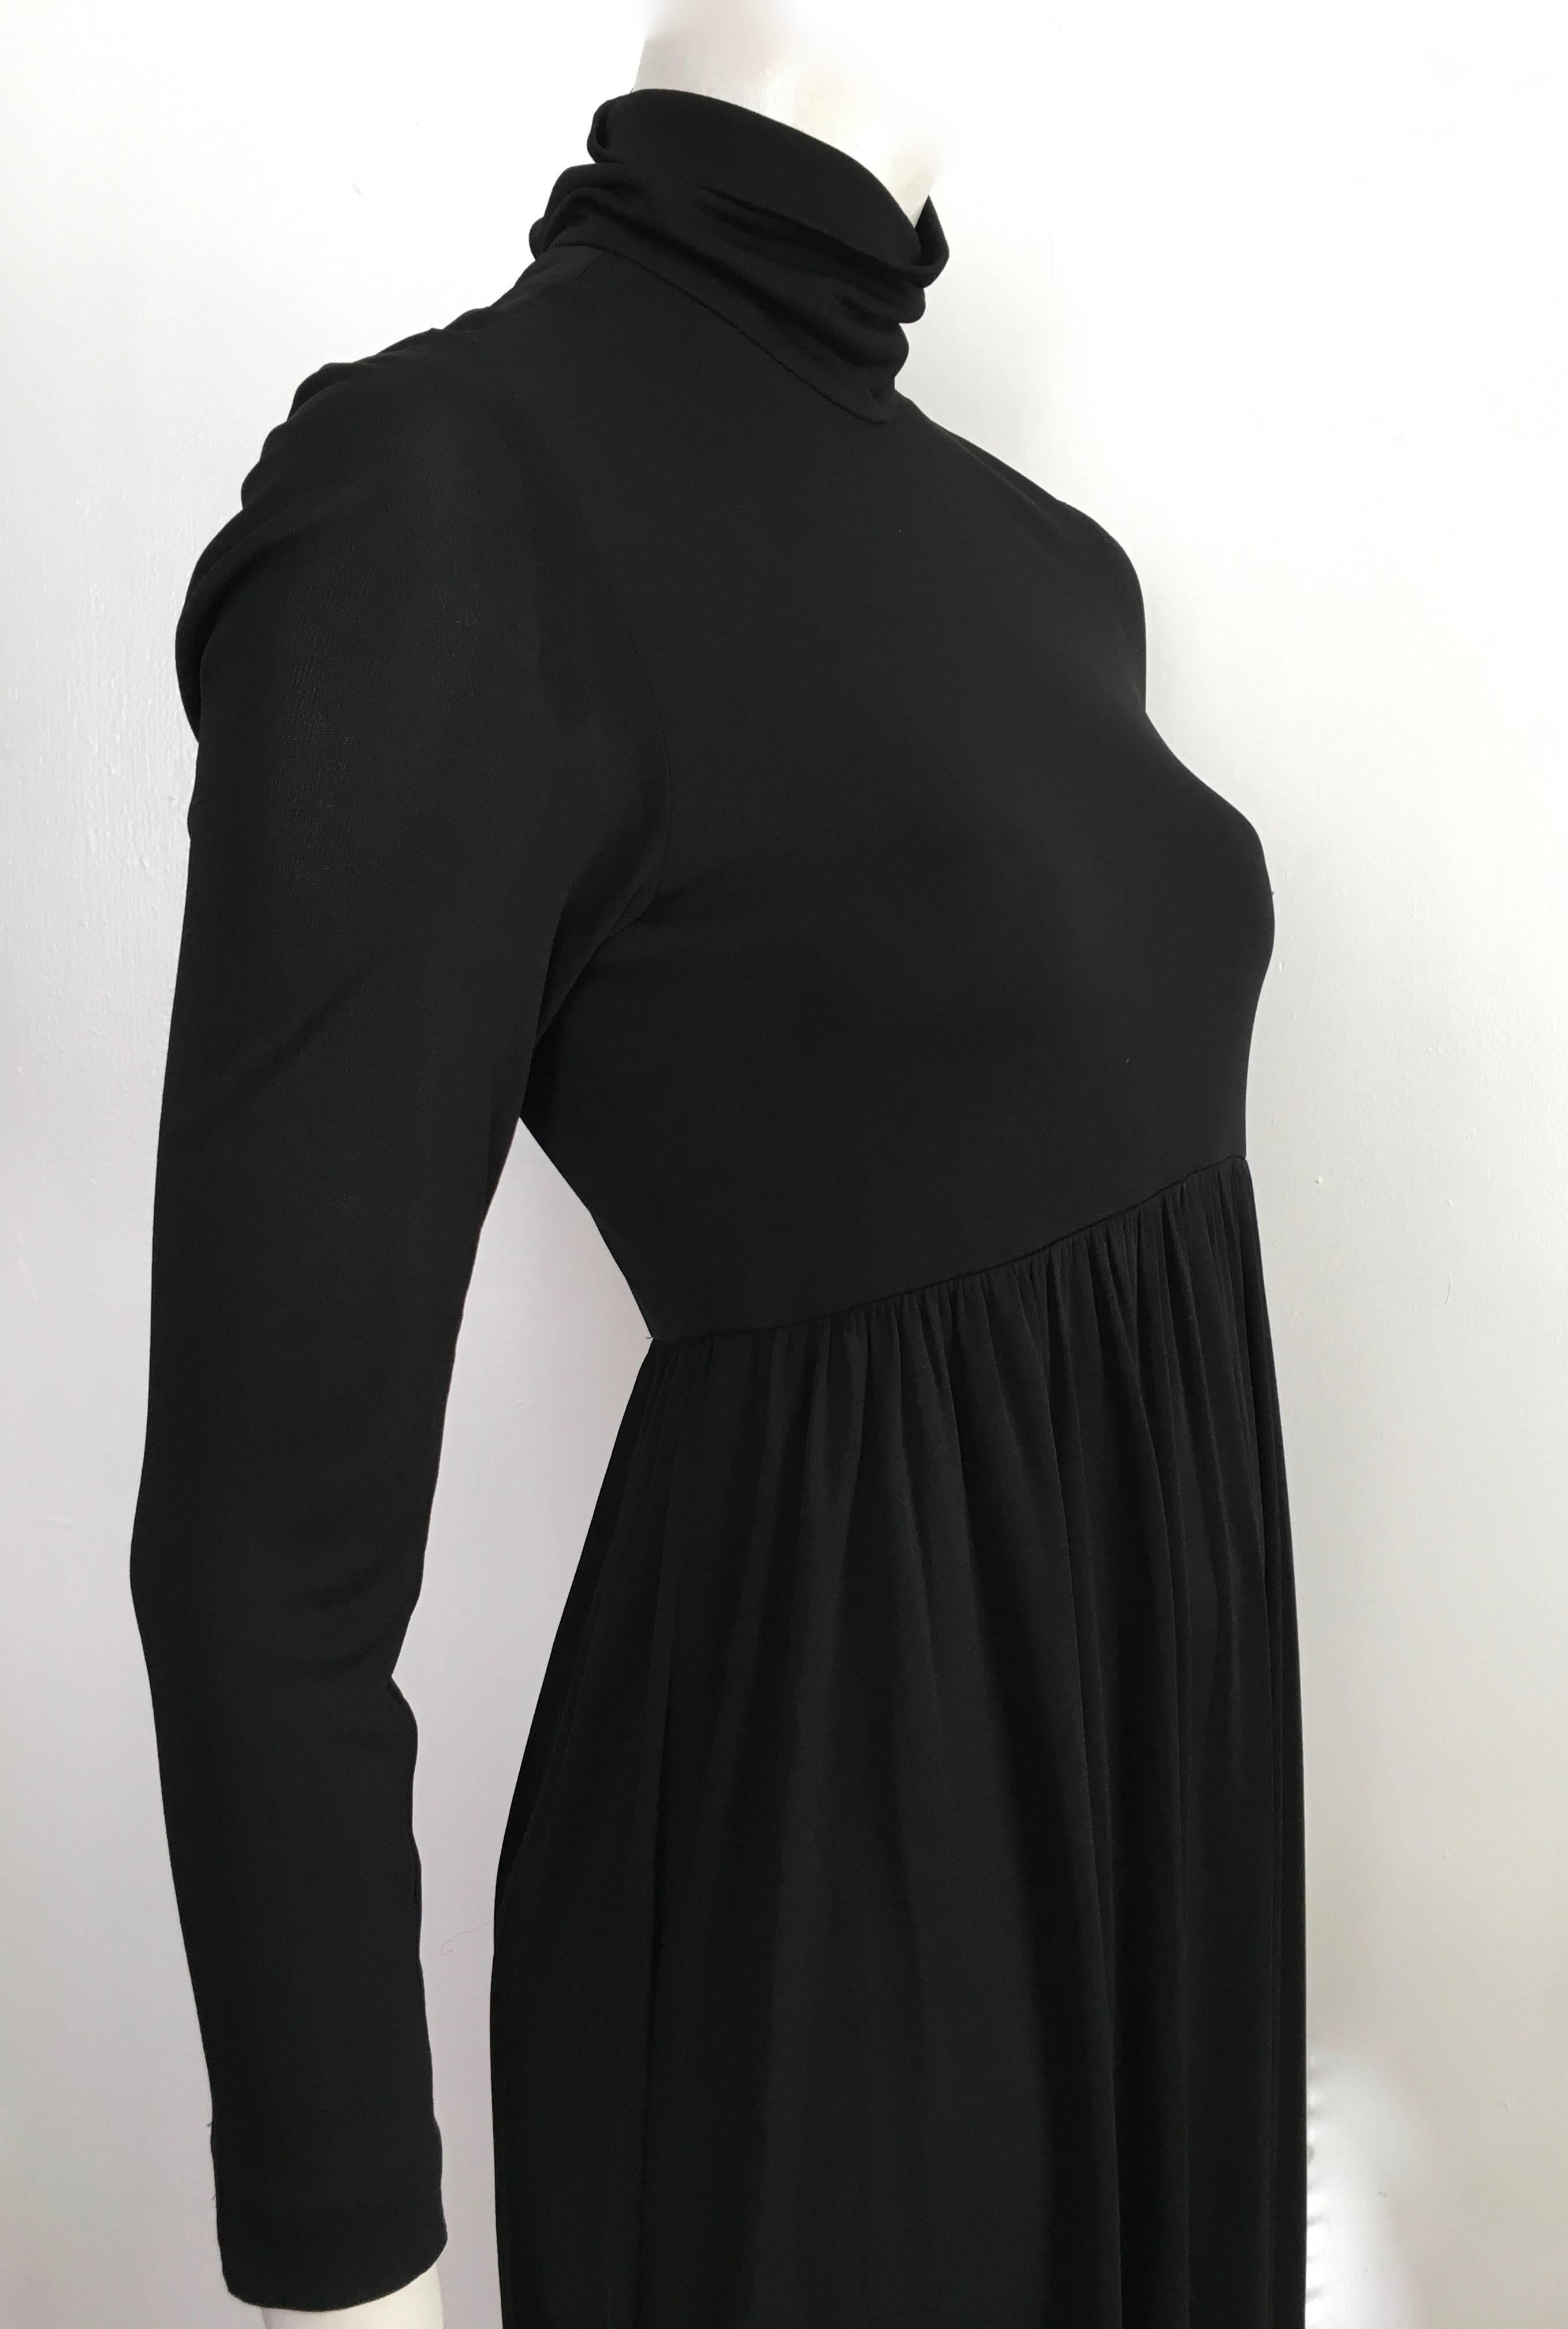 Joseph Magnin 1960s Black Jersey Maxi Dress Size 4.  For Sale 8